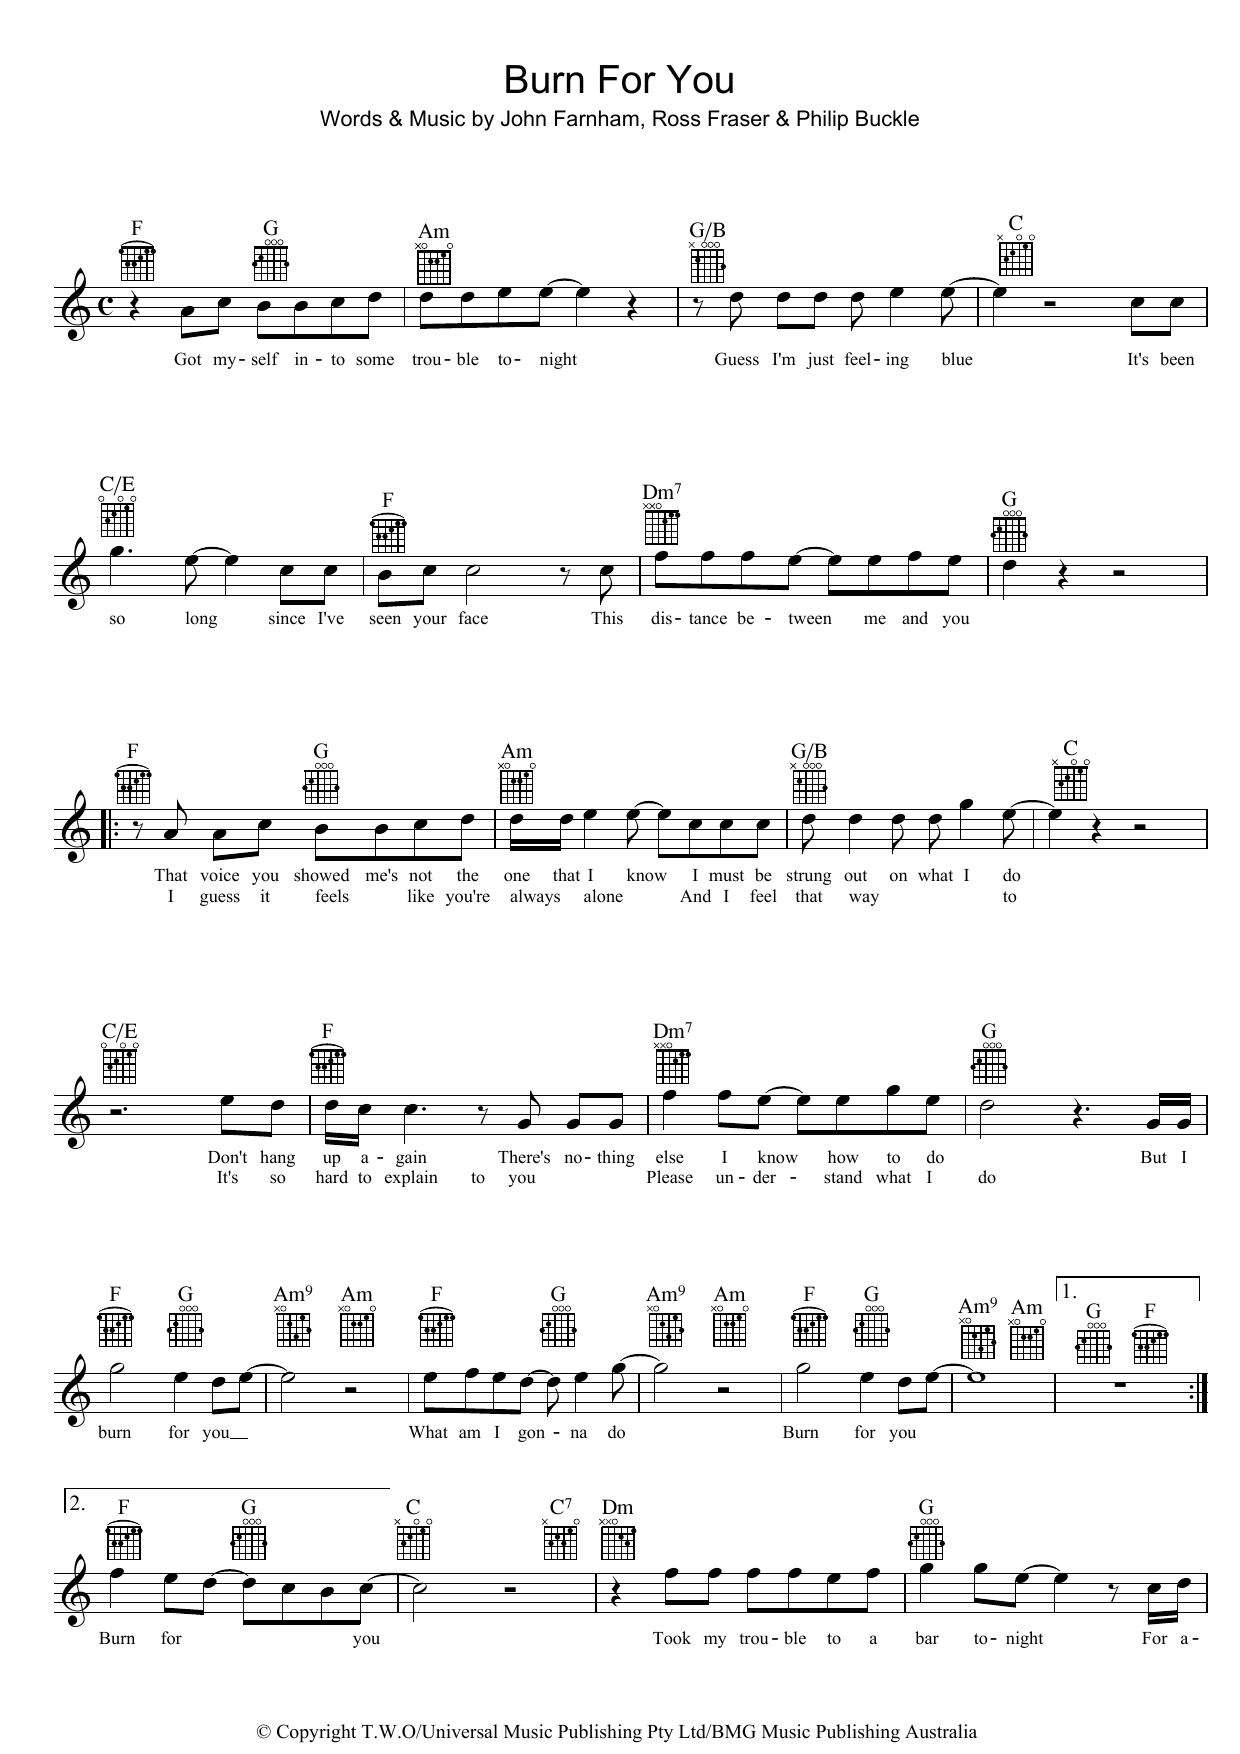 John Farnham Burn For You Sheet Music Notes & Chords for Easy Piano - Download or Print PDF